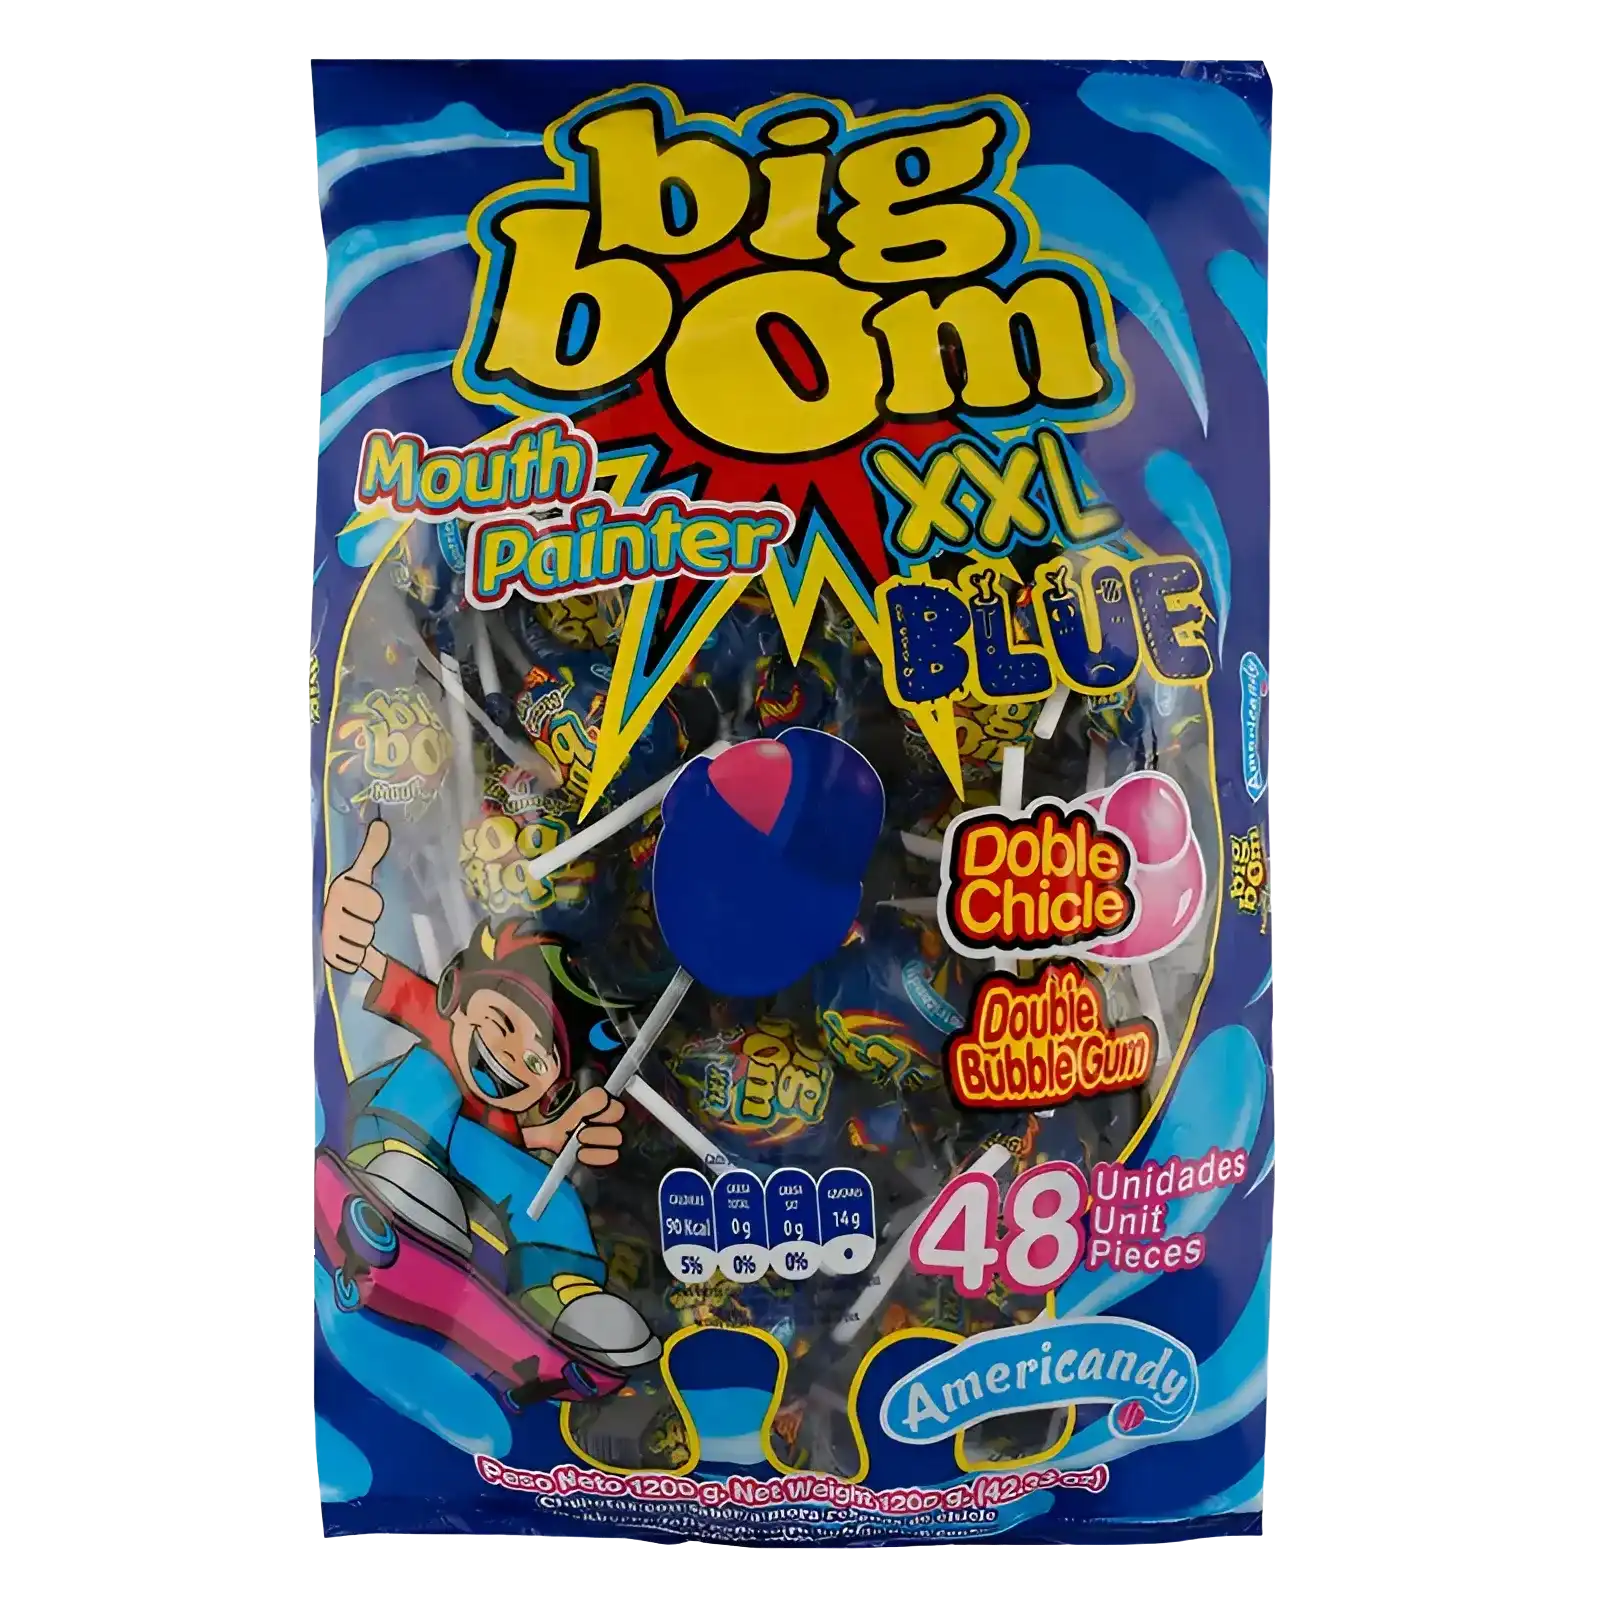 Americandy Big Bom XXL Mouth Painter Blue Lollipops, 48 x 25 gm - 01040649 (JBI0062F2)